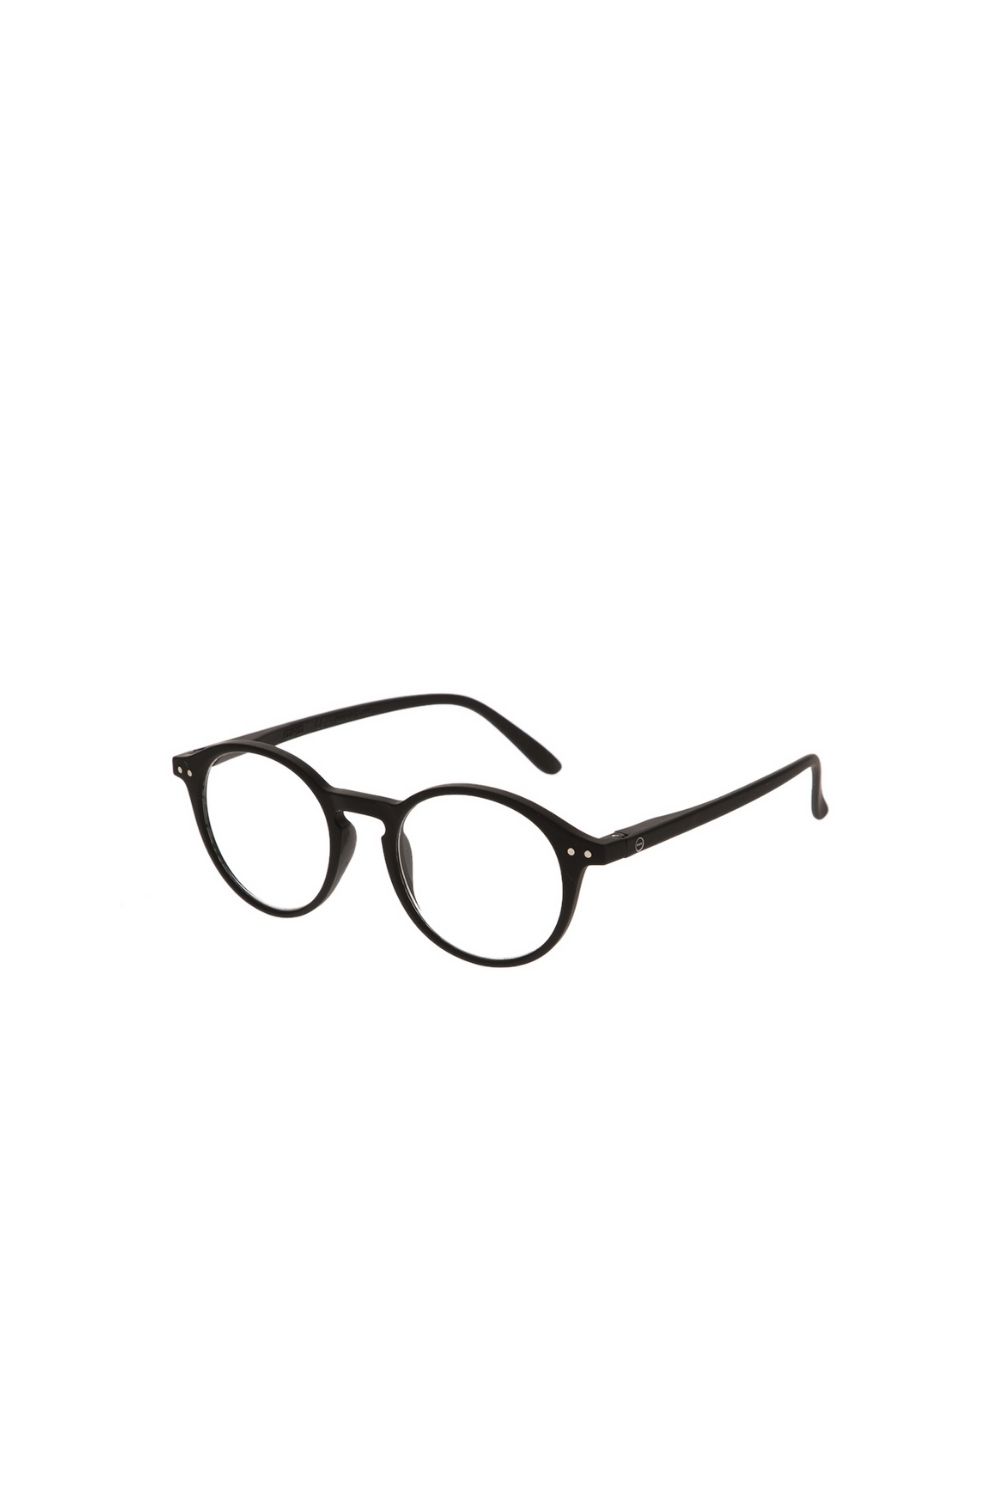 IZIPIZI – Unisex γυαλιά οράσεως IZIPIZI READING #D μαύρο 1652885.0-0072